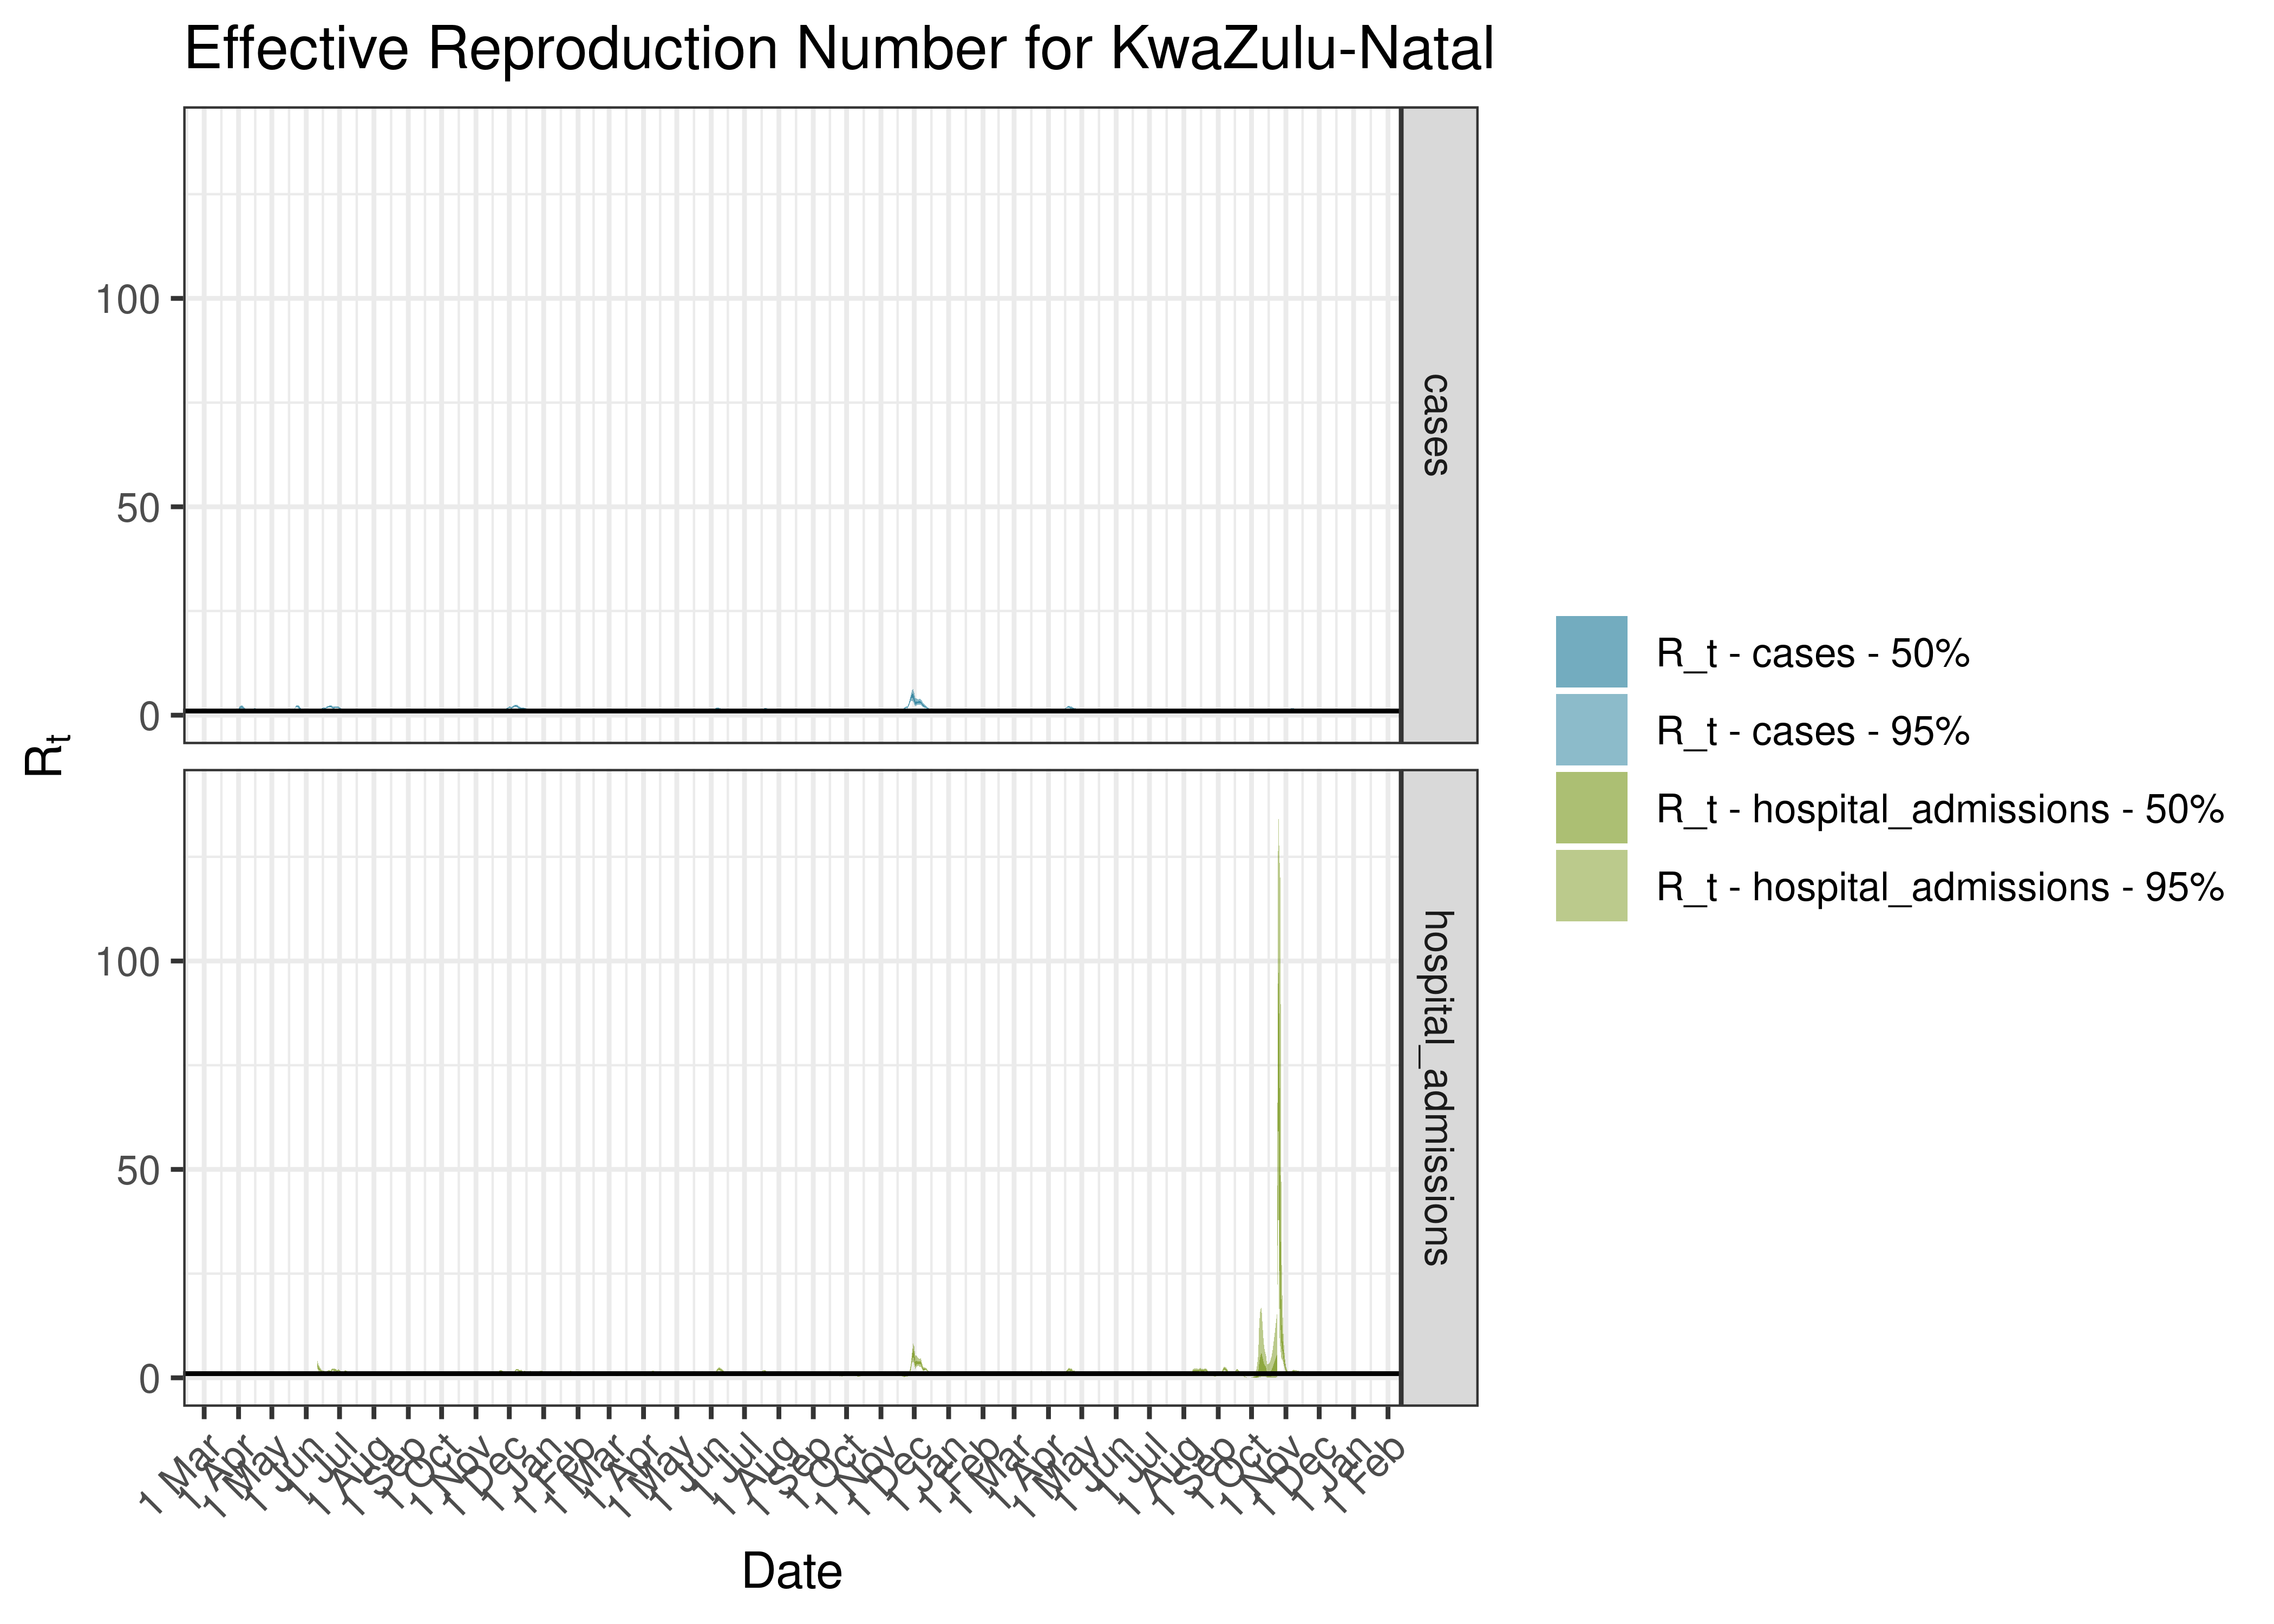 Estimated Effective Reproduction Number for KwaZulu-Natal since 1 April 2020